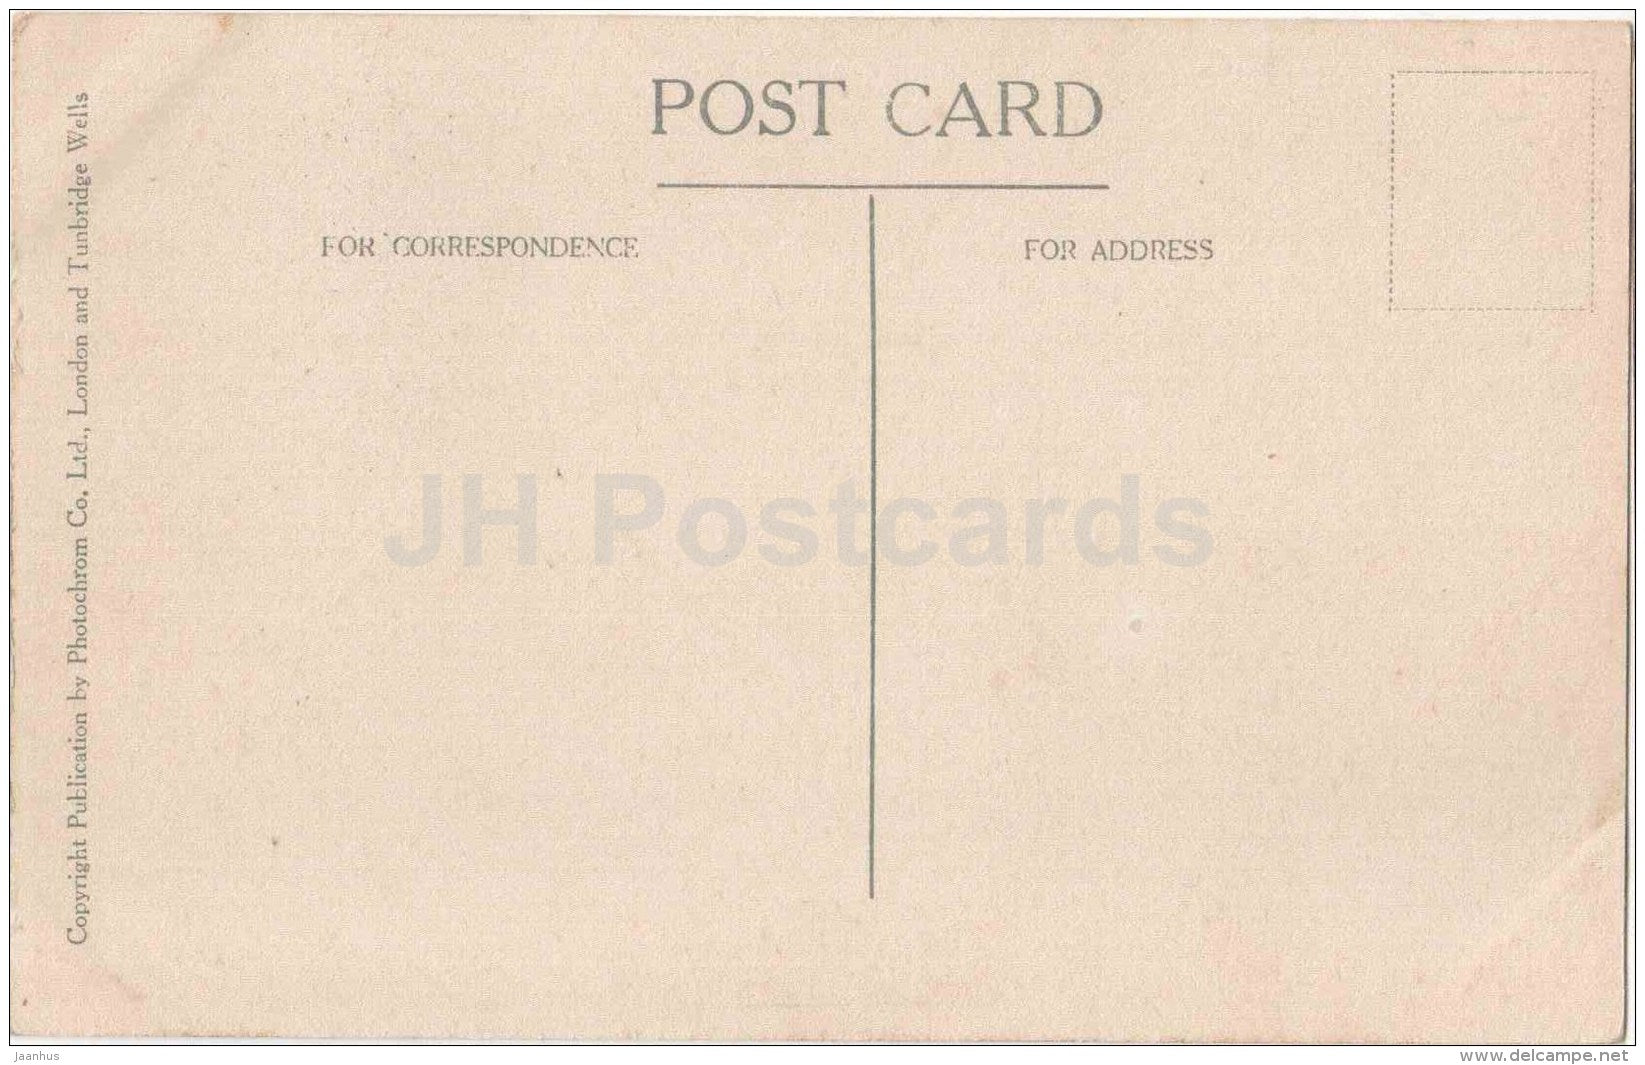 Cardiff - Queen street - tram - Galmorgan - Wales - 56422 - old postcard - unused - JH Postcards